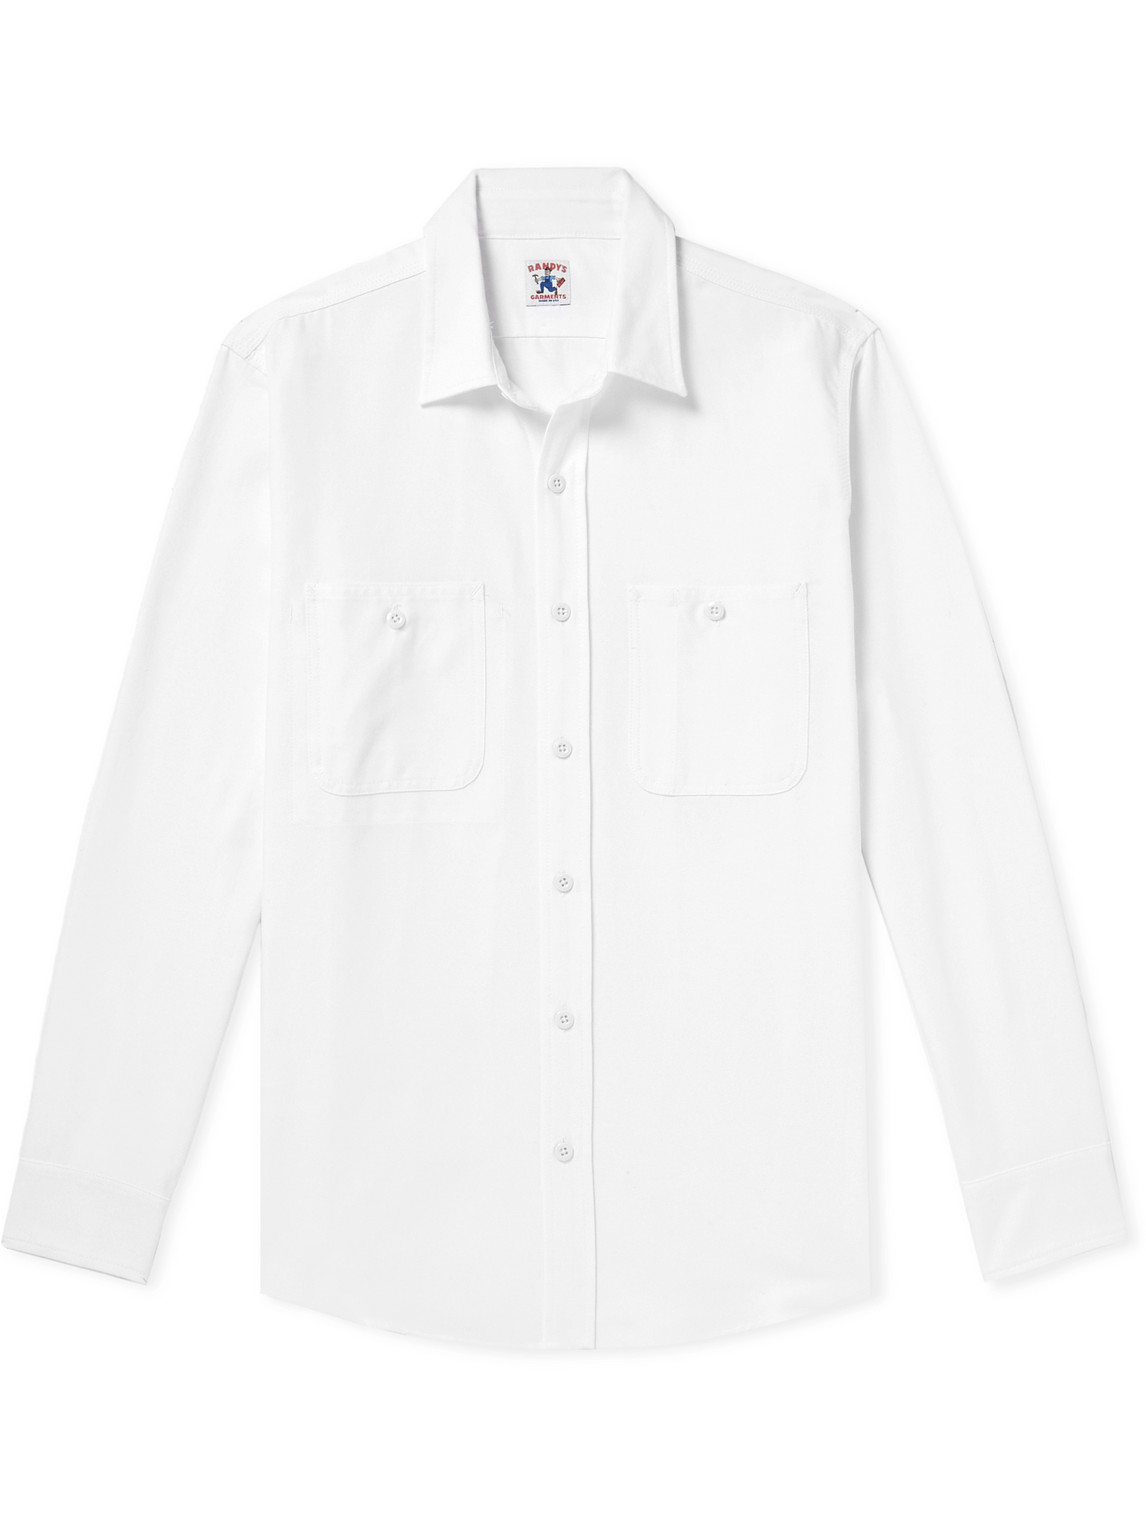 Cotton-Blend Oxford Shirt